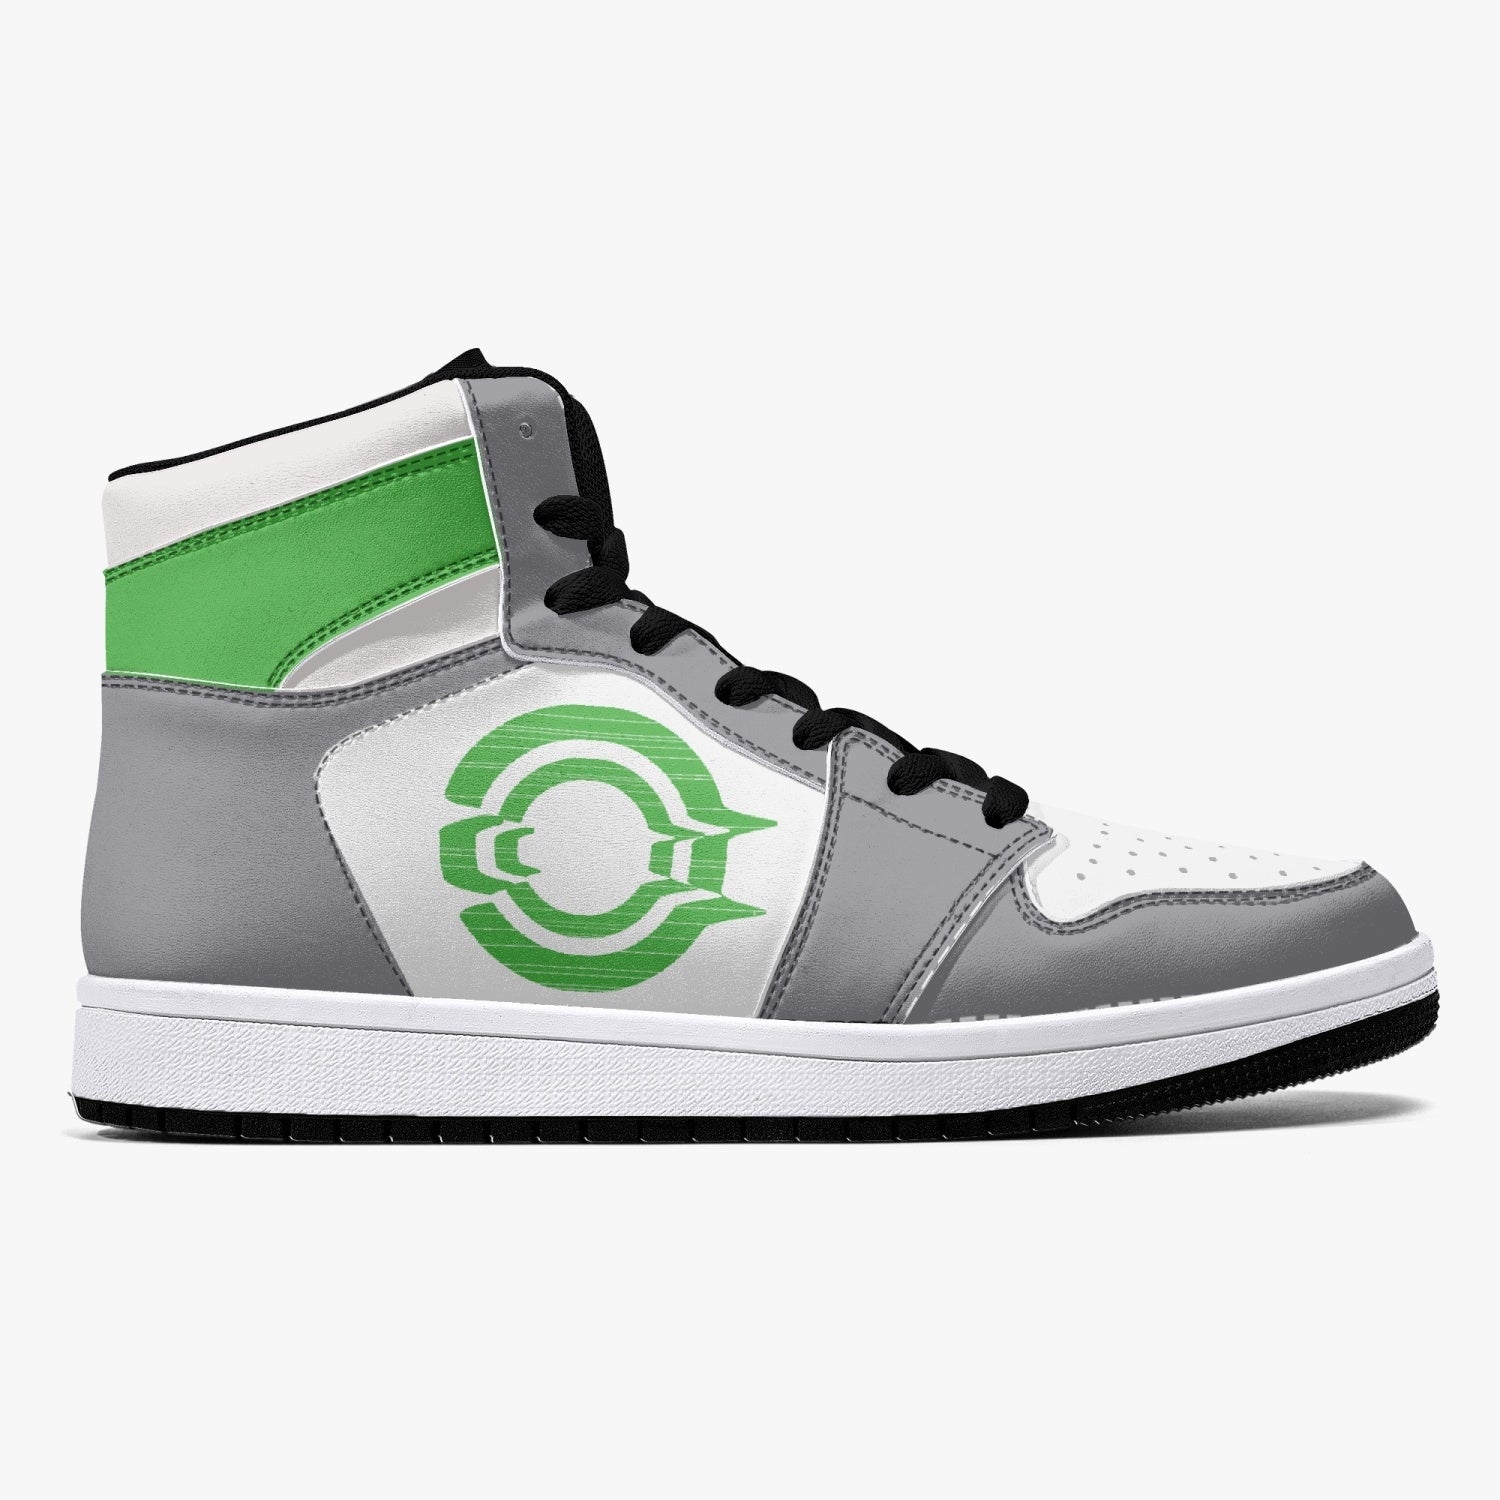 OOTAMAWAE Original Brand High-Top Leather Sneakers - Grey Green logo KilyClothing